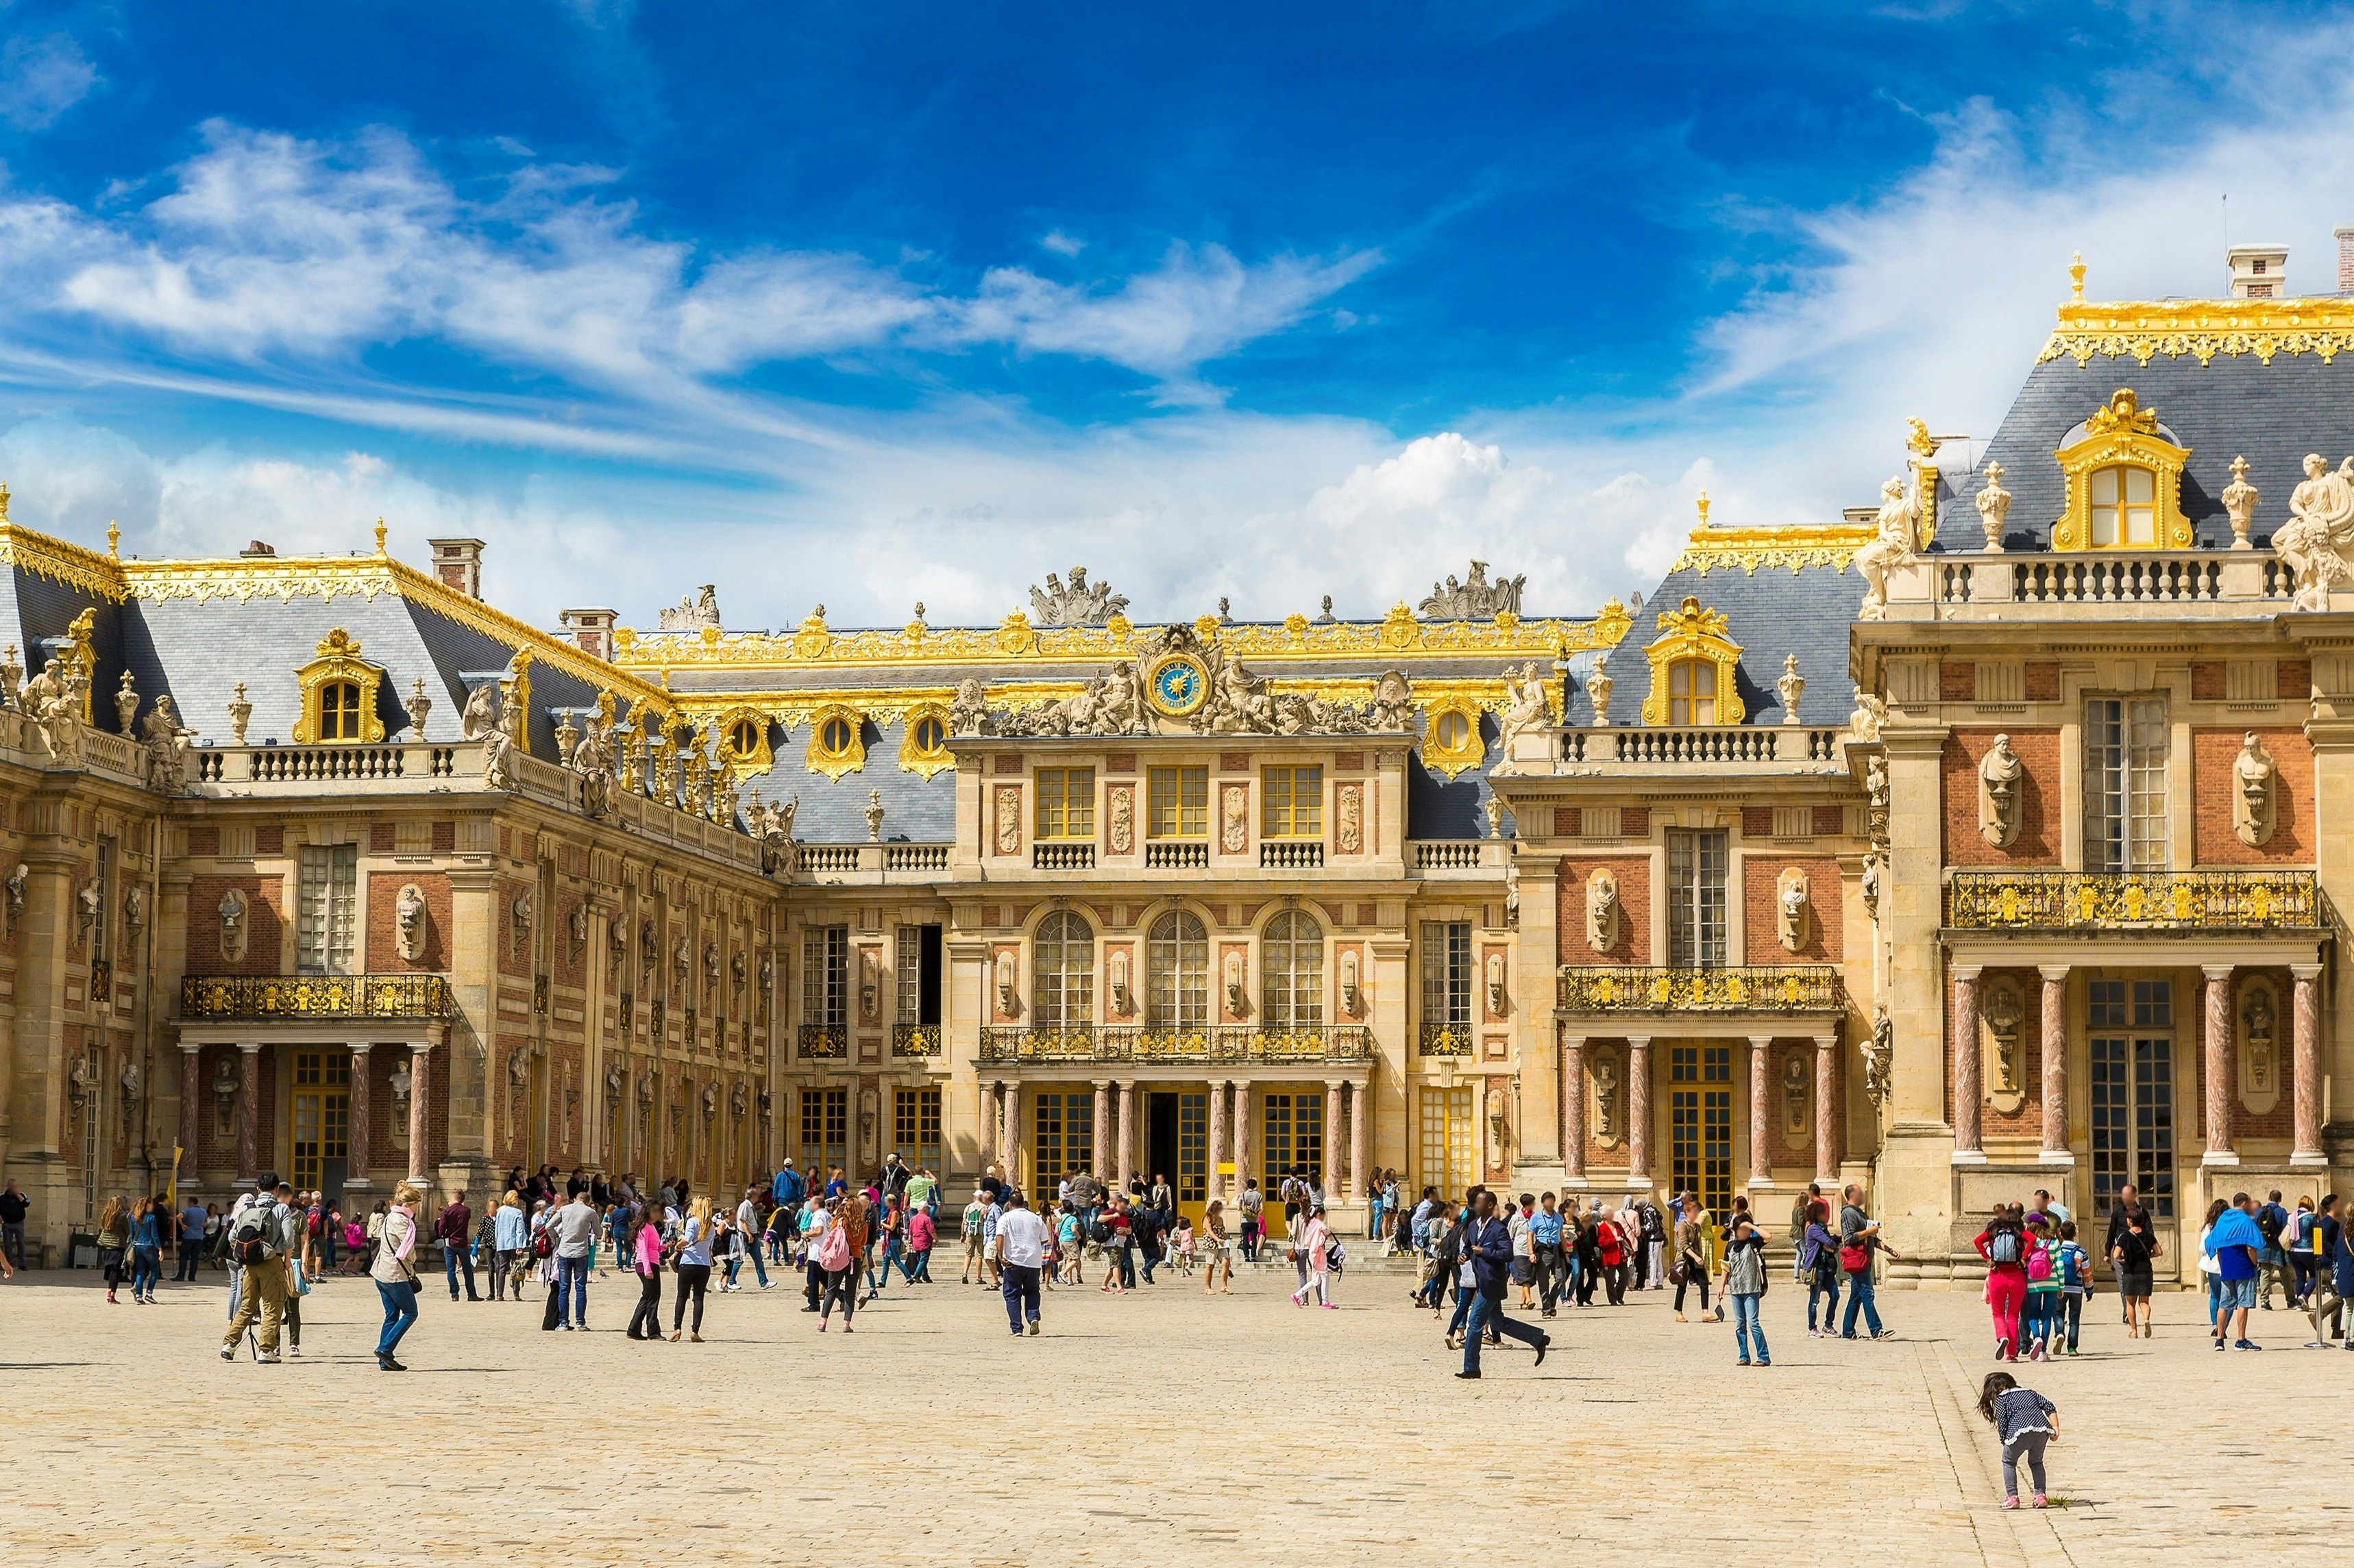  Sun King T-Shirt Palace of Versailles Louis XIV France